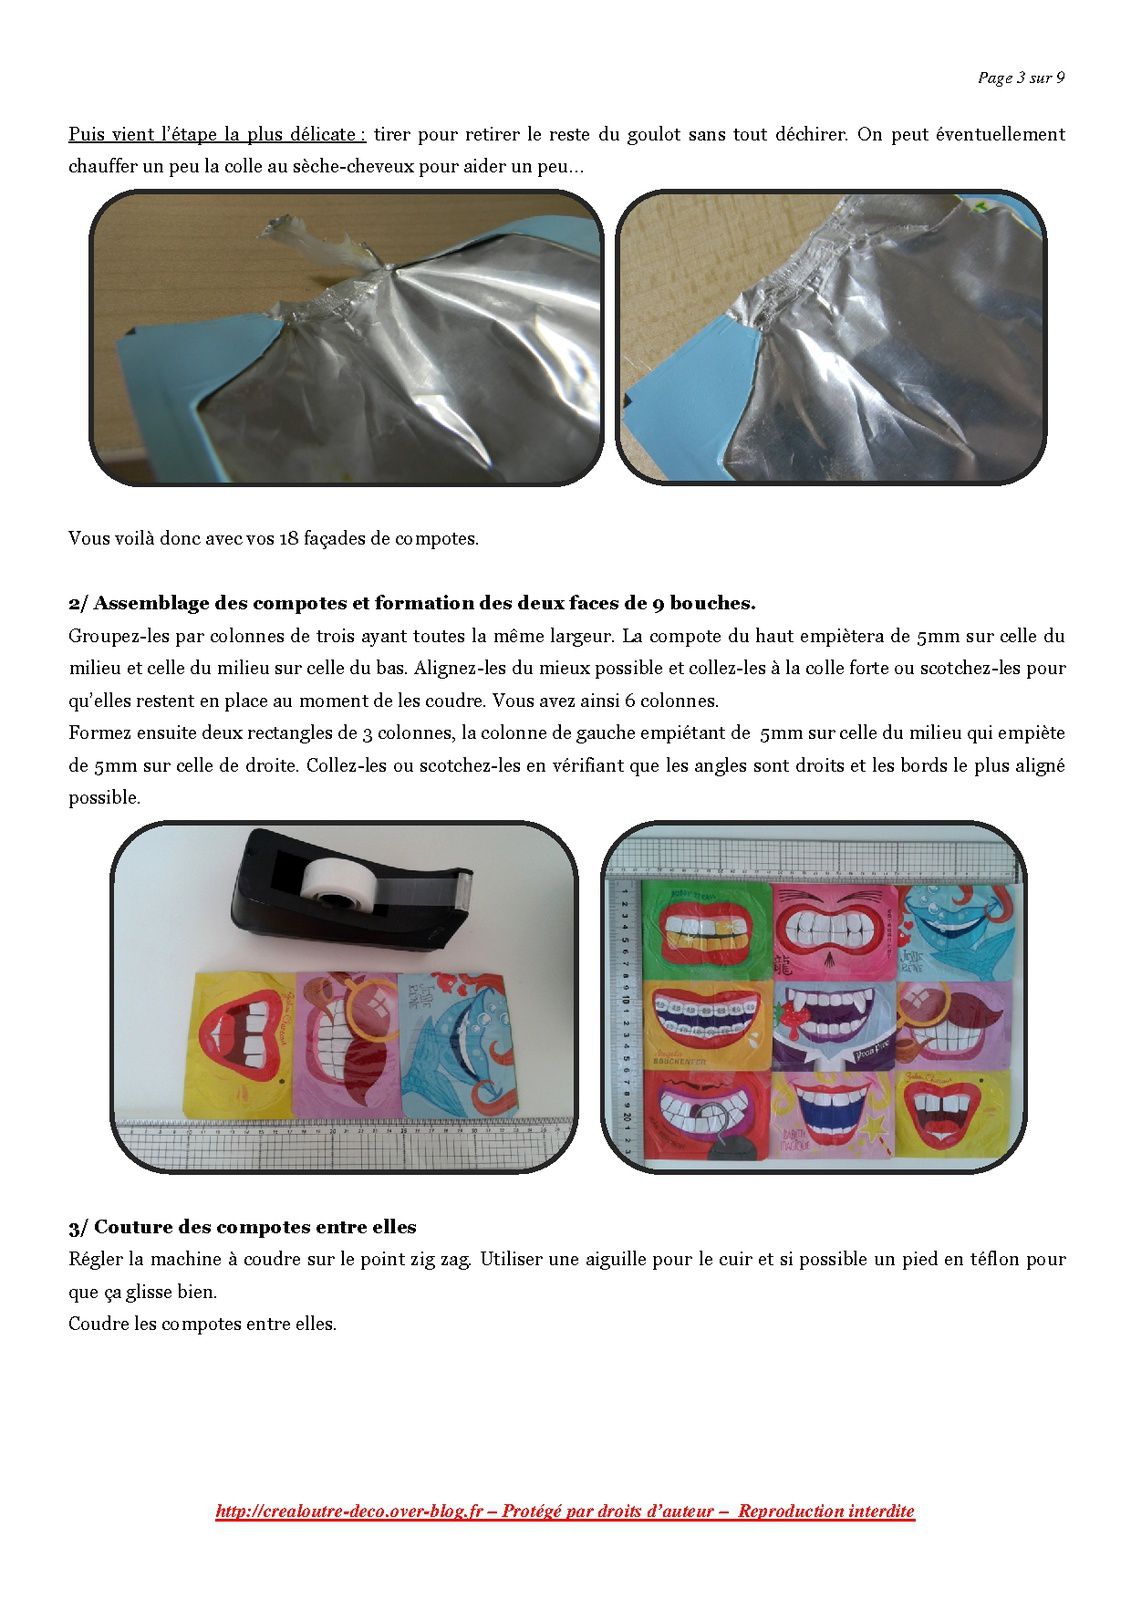 Tuto : le sac récup’ de compotes Andros P’tit Dros (upcycling)